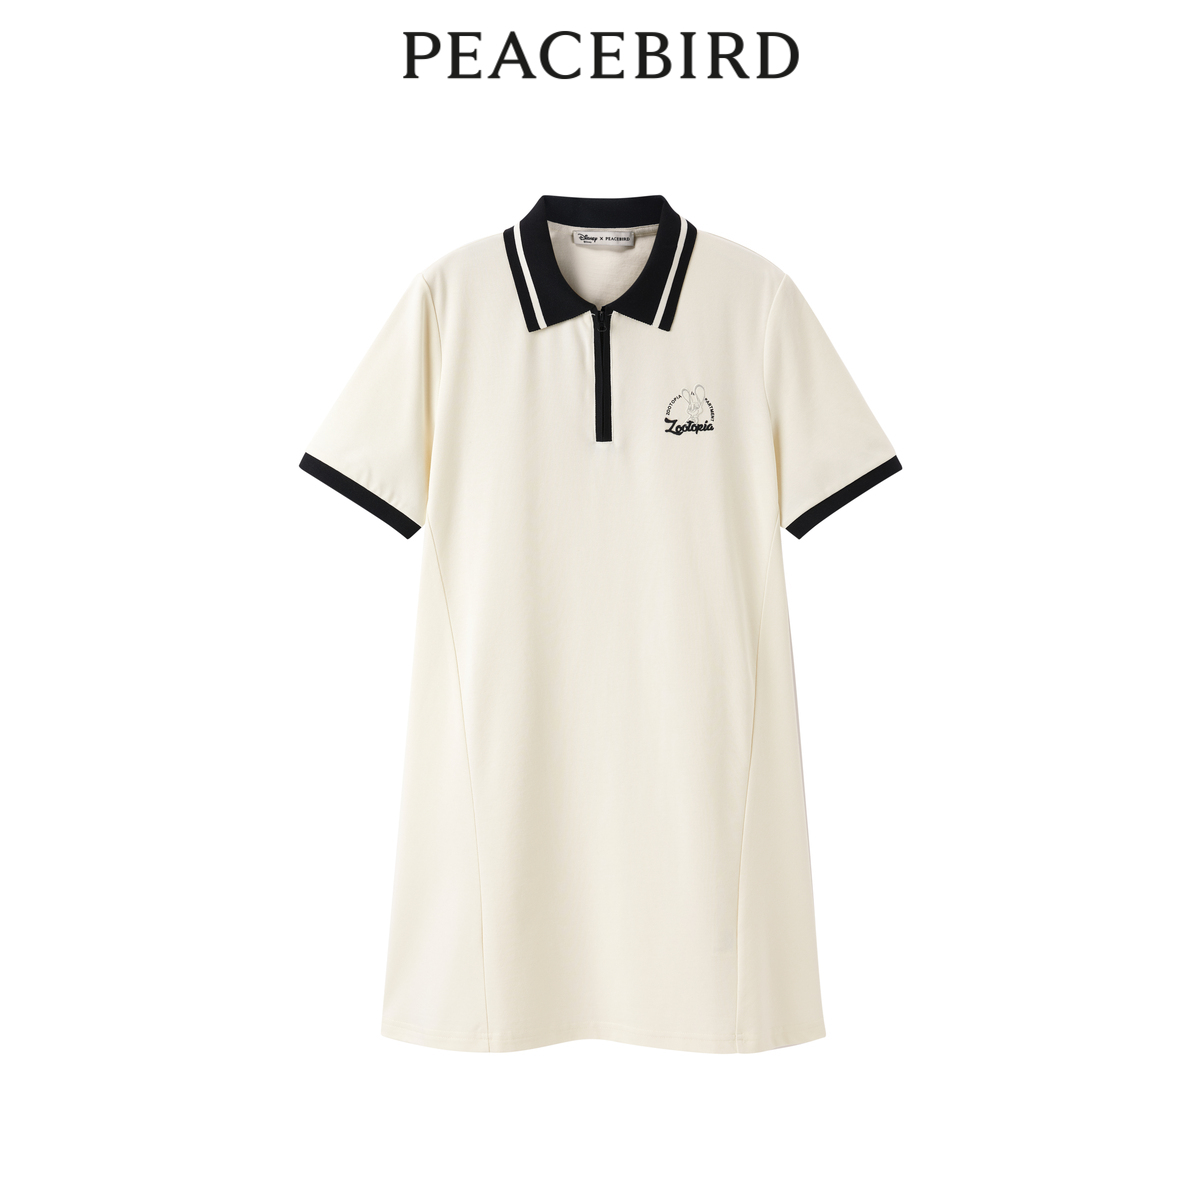 PEACEBIRD 太平鸟 疯狂动物城合作系列POLO连衣裙 A1FAD2240 150元包邮